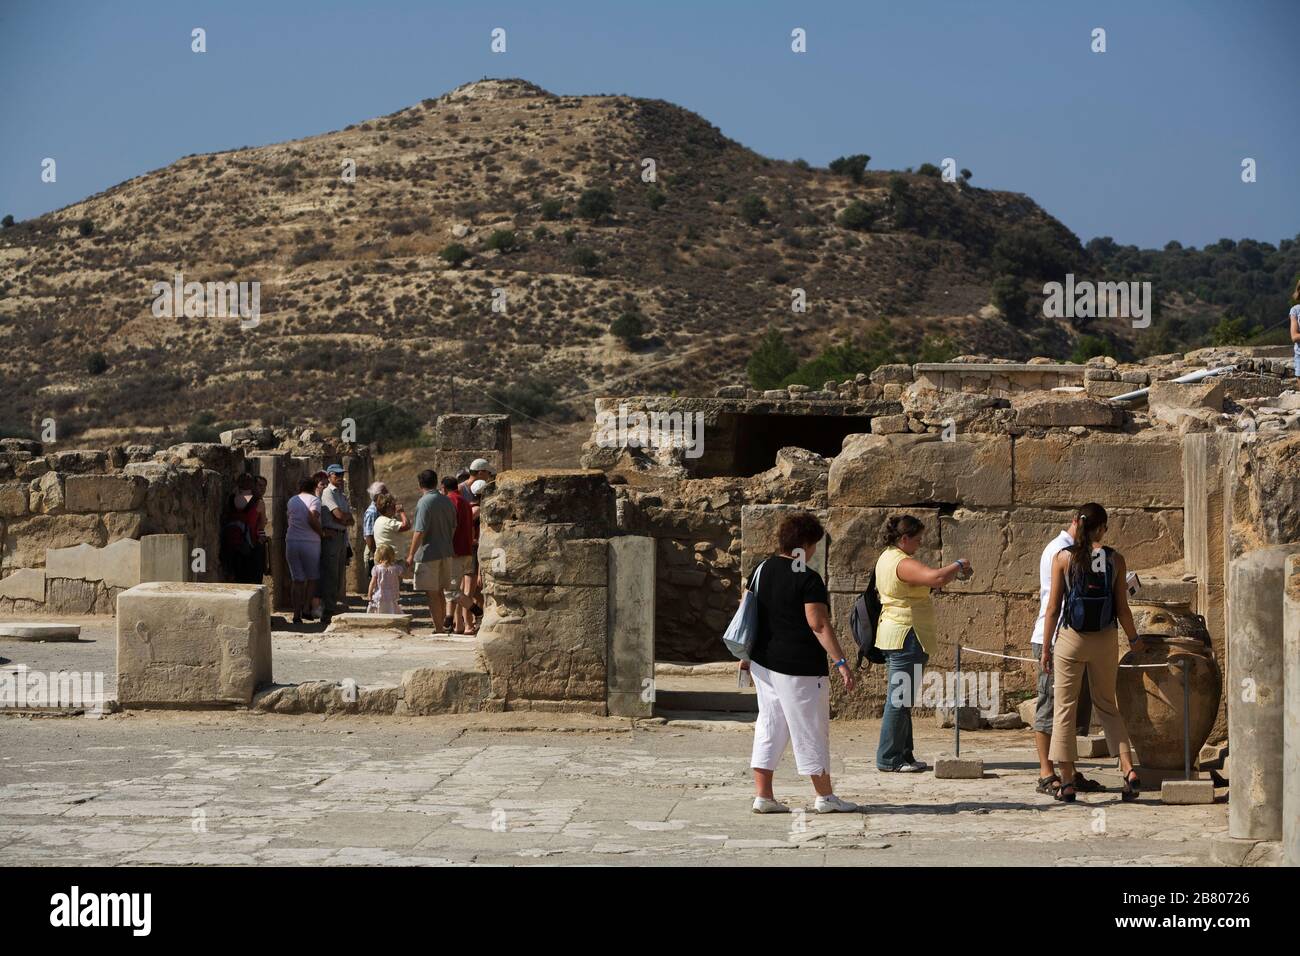 Palace of Festos site. Crete island. Greece. Mediterranean Sea. Stock Photo